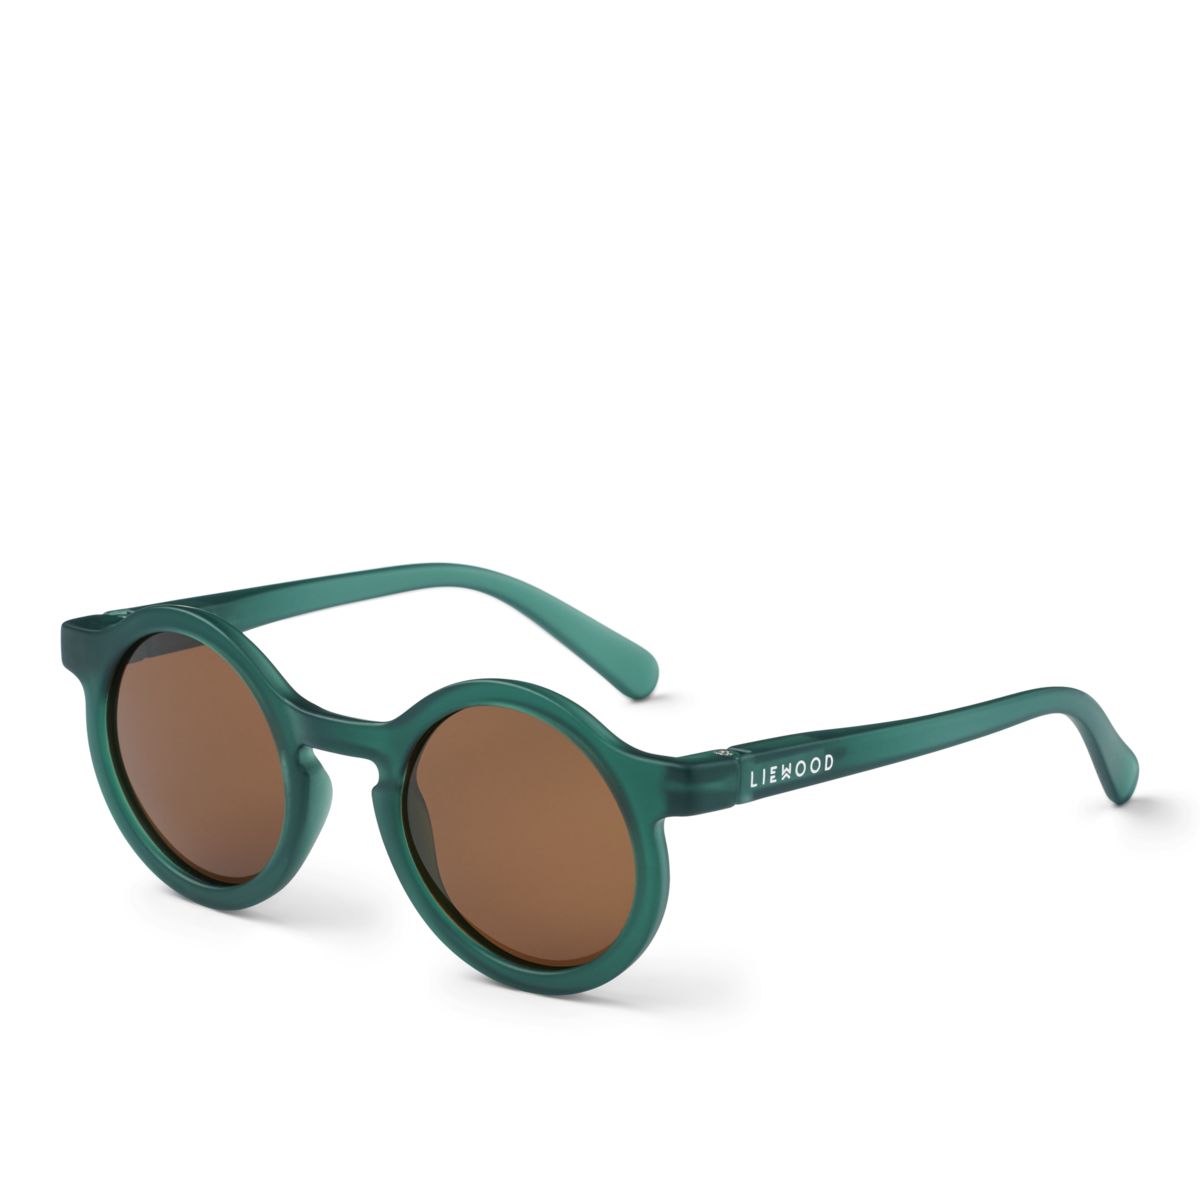 Darla sunglasses 4 - 10 years - Garden Green